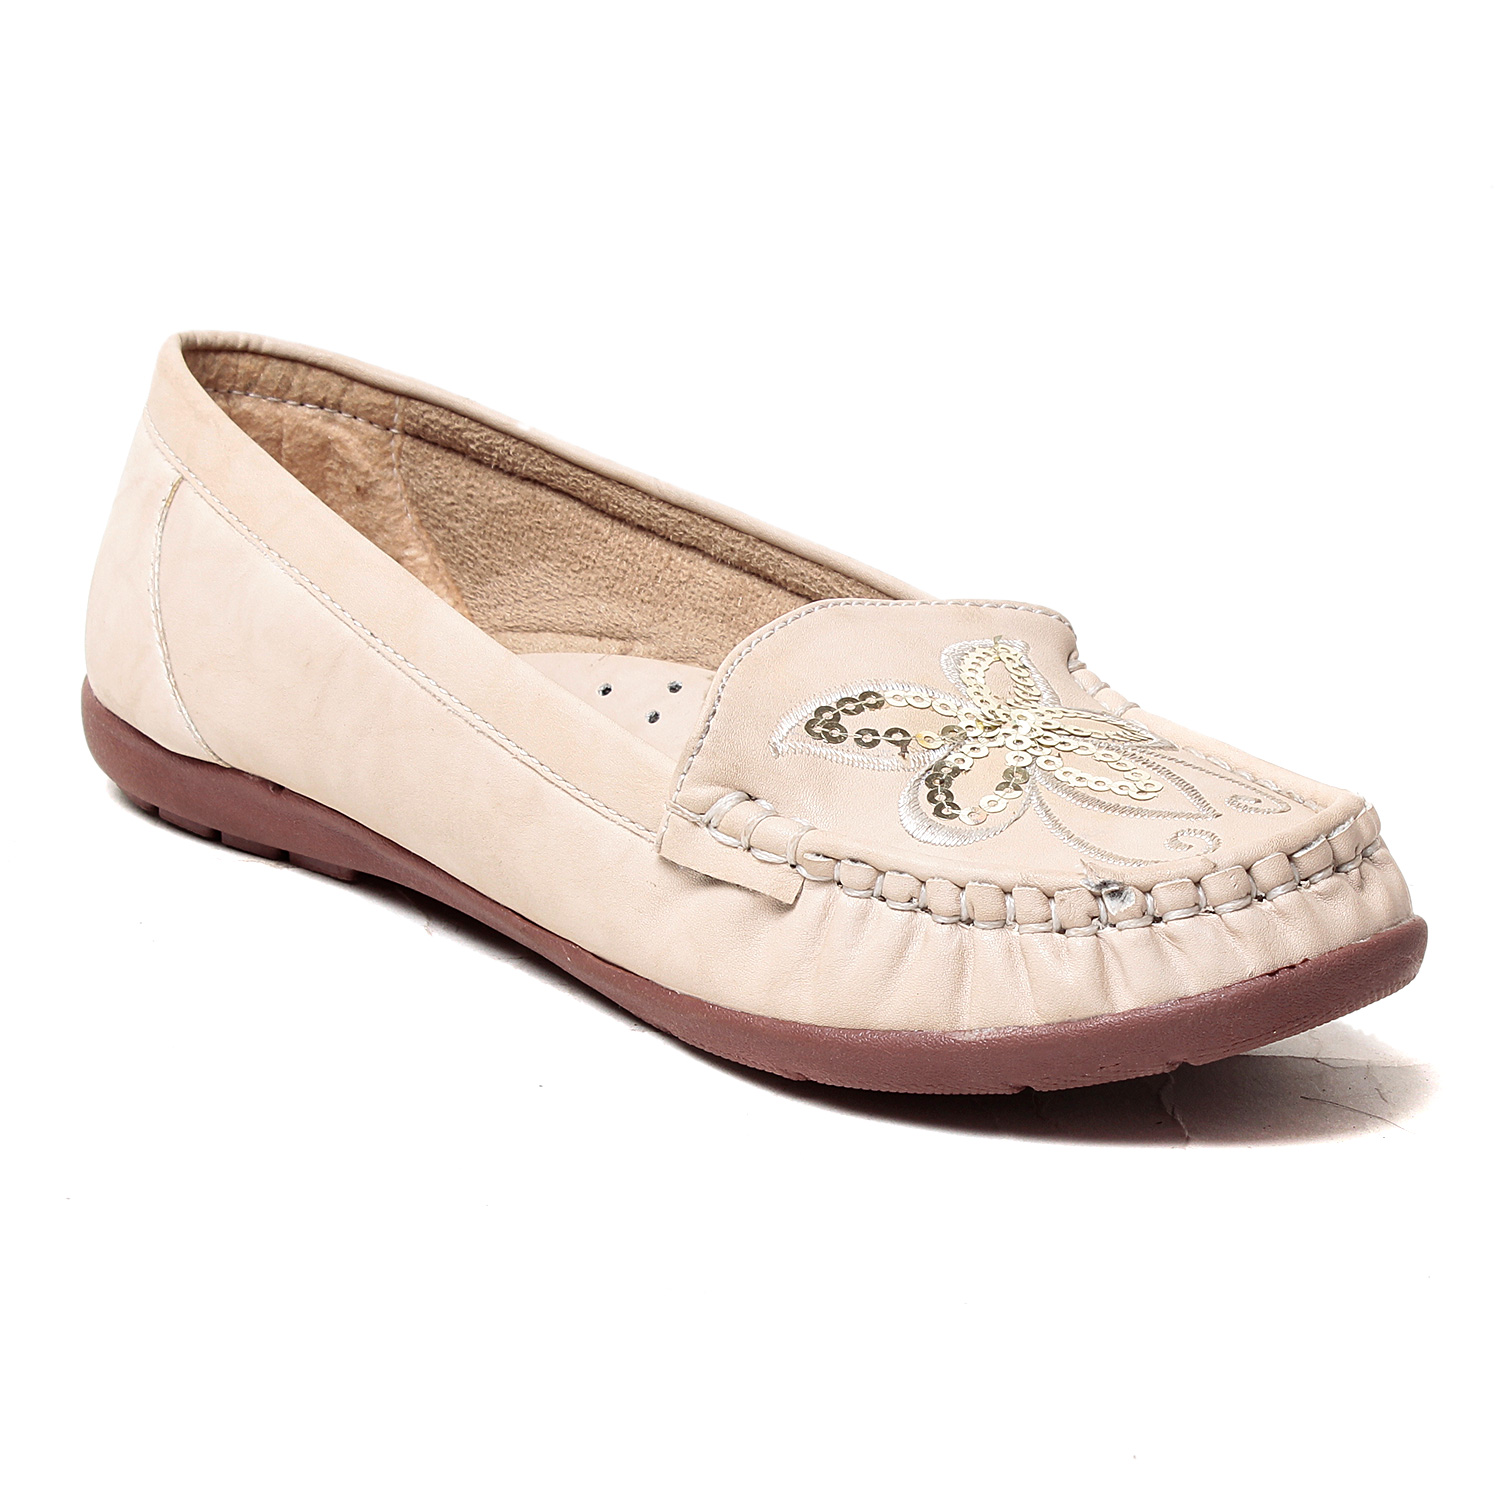 Buy MSC Women's Cream Loafers Online @ ₹1198 from ShopClues